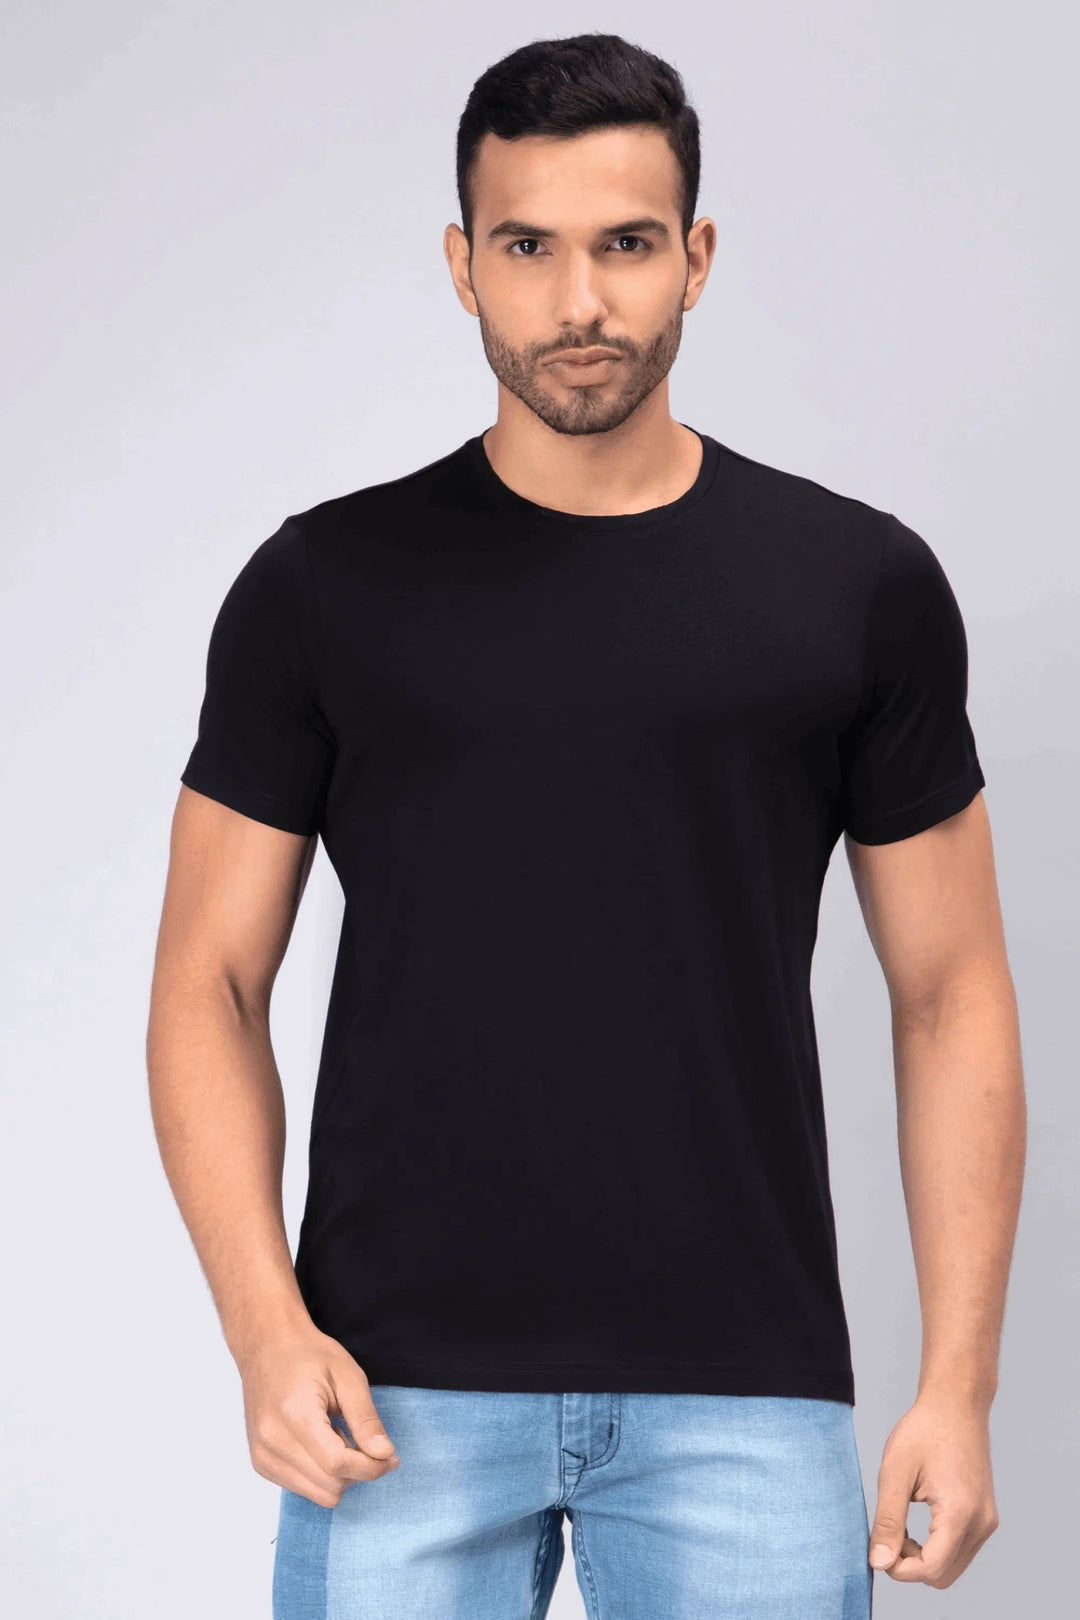 Men's Half-Sleeve Solid Black Cotton T-shirt